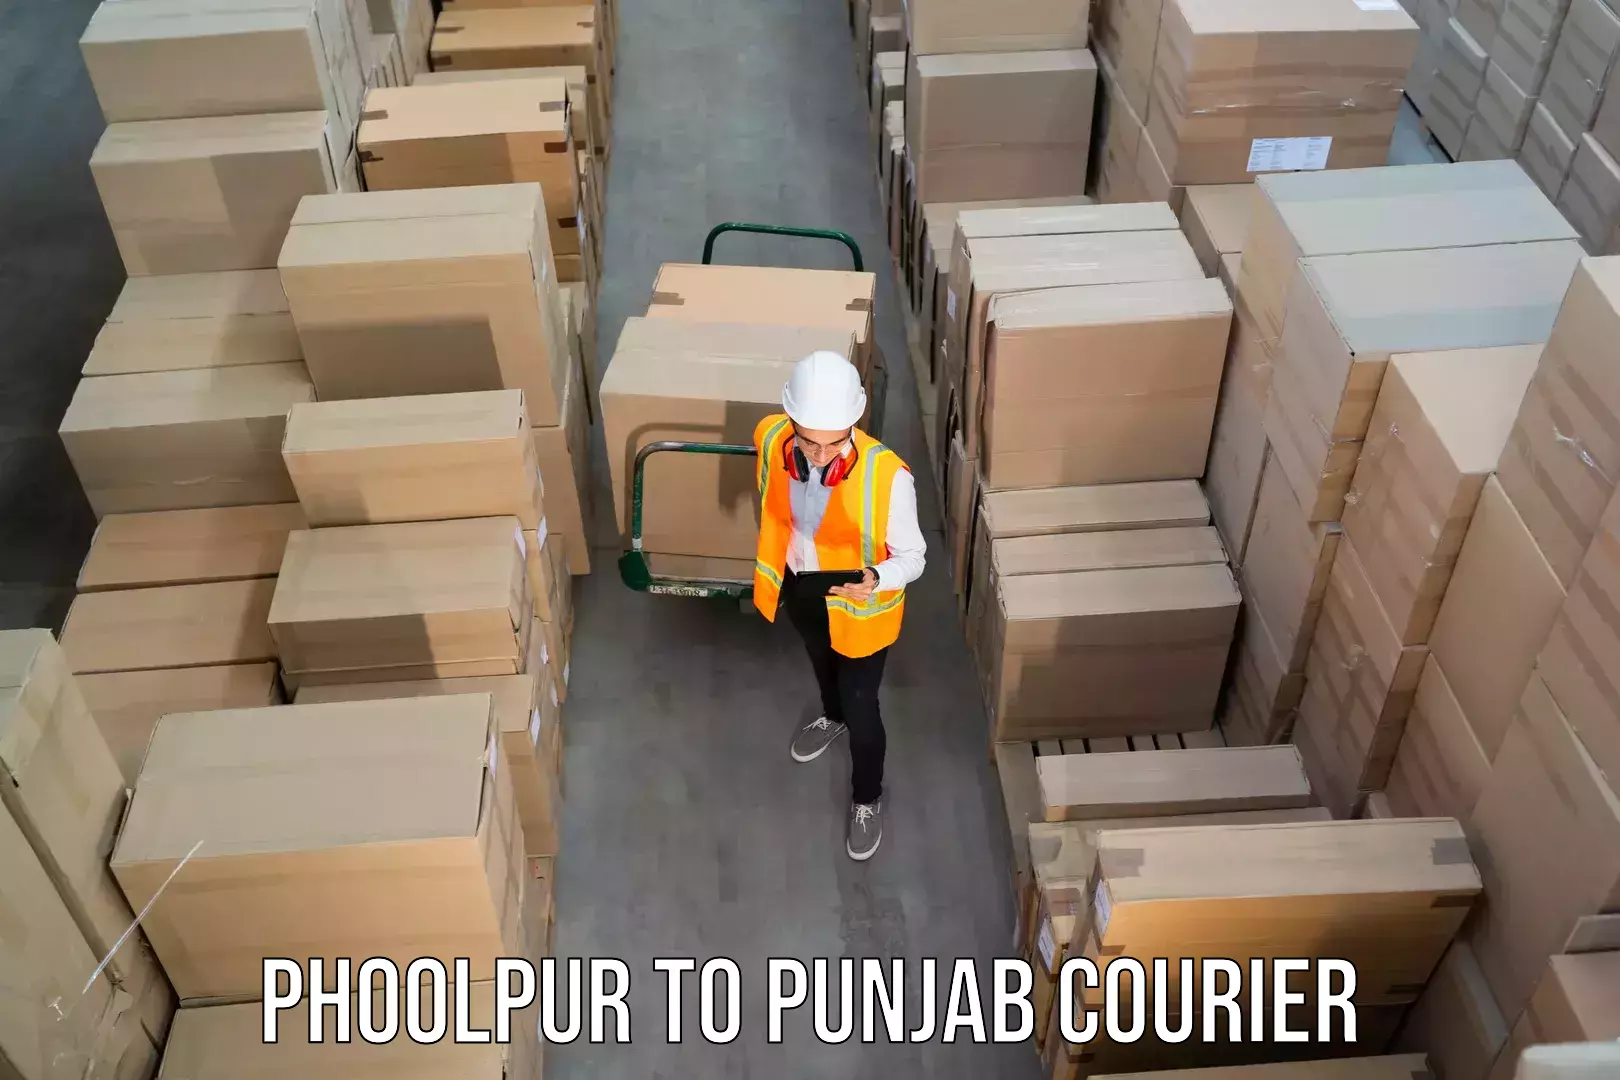 Express mail service Phoolpur to Punjab